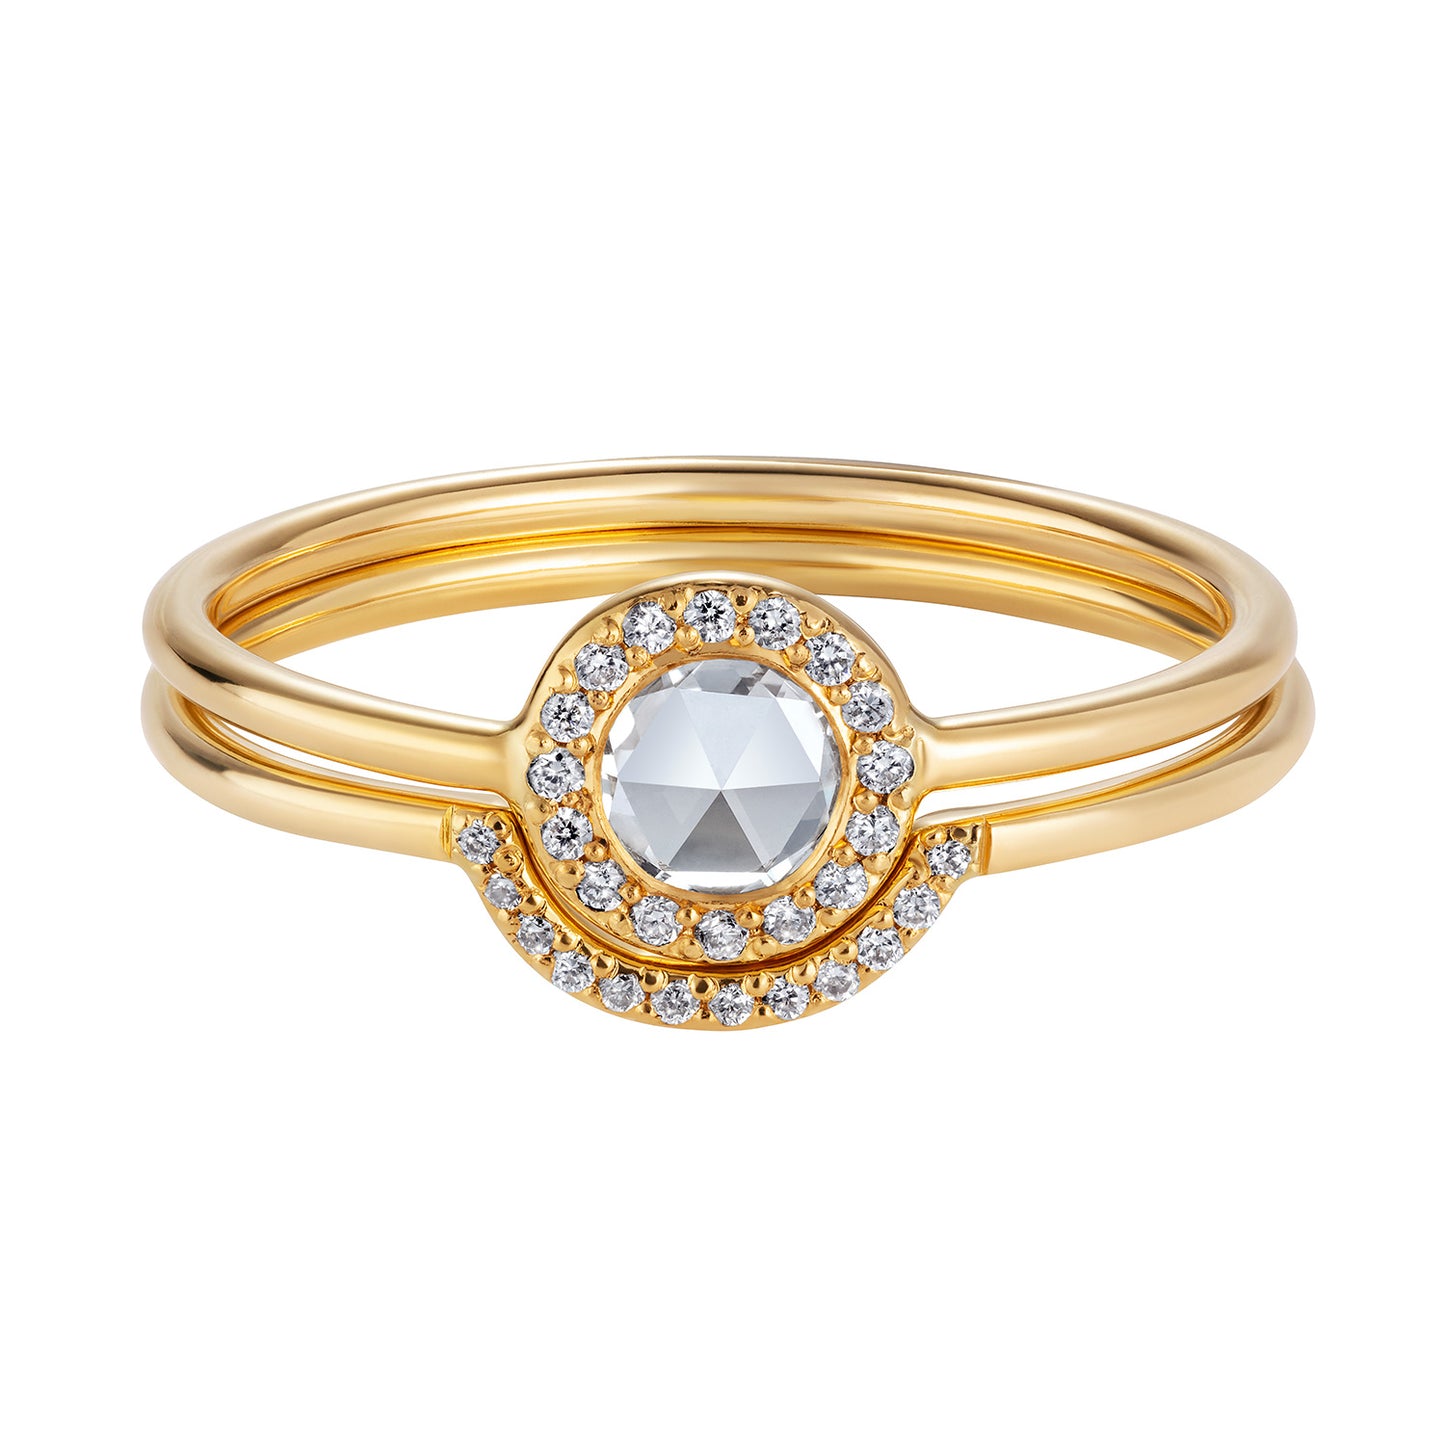 Sweet Pea 18ct yellow gold diamond rose cut halo engagement ring stacked with diamond set horseshoe wedding ring.